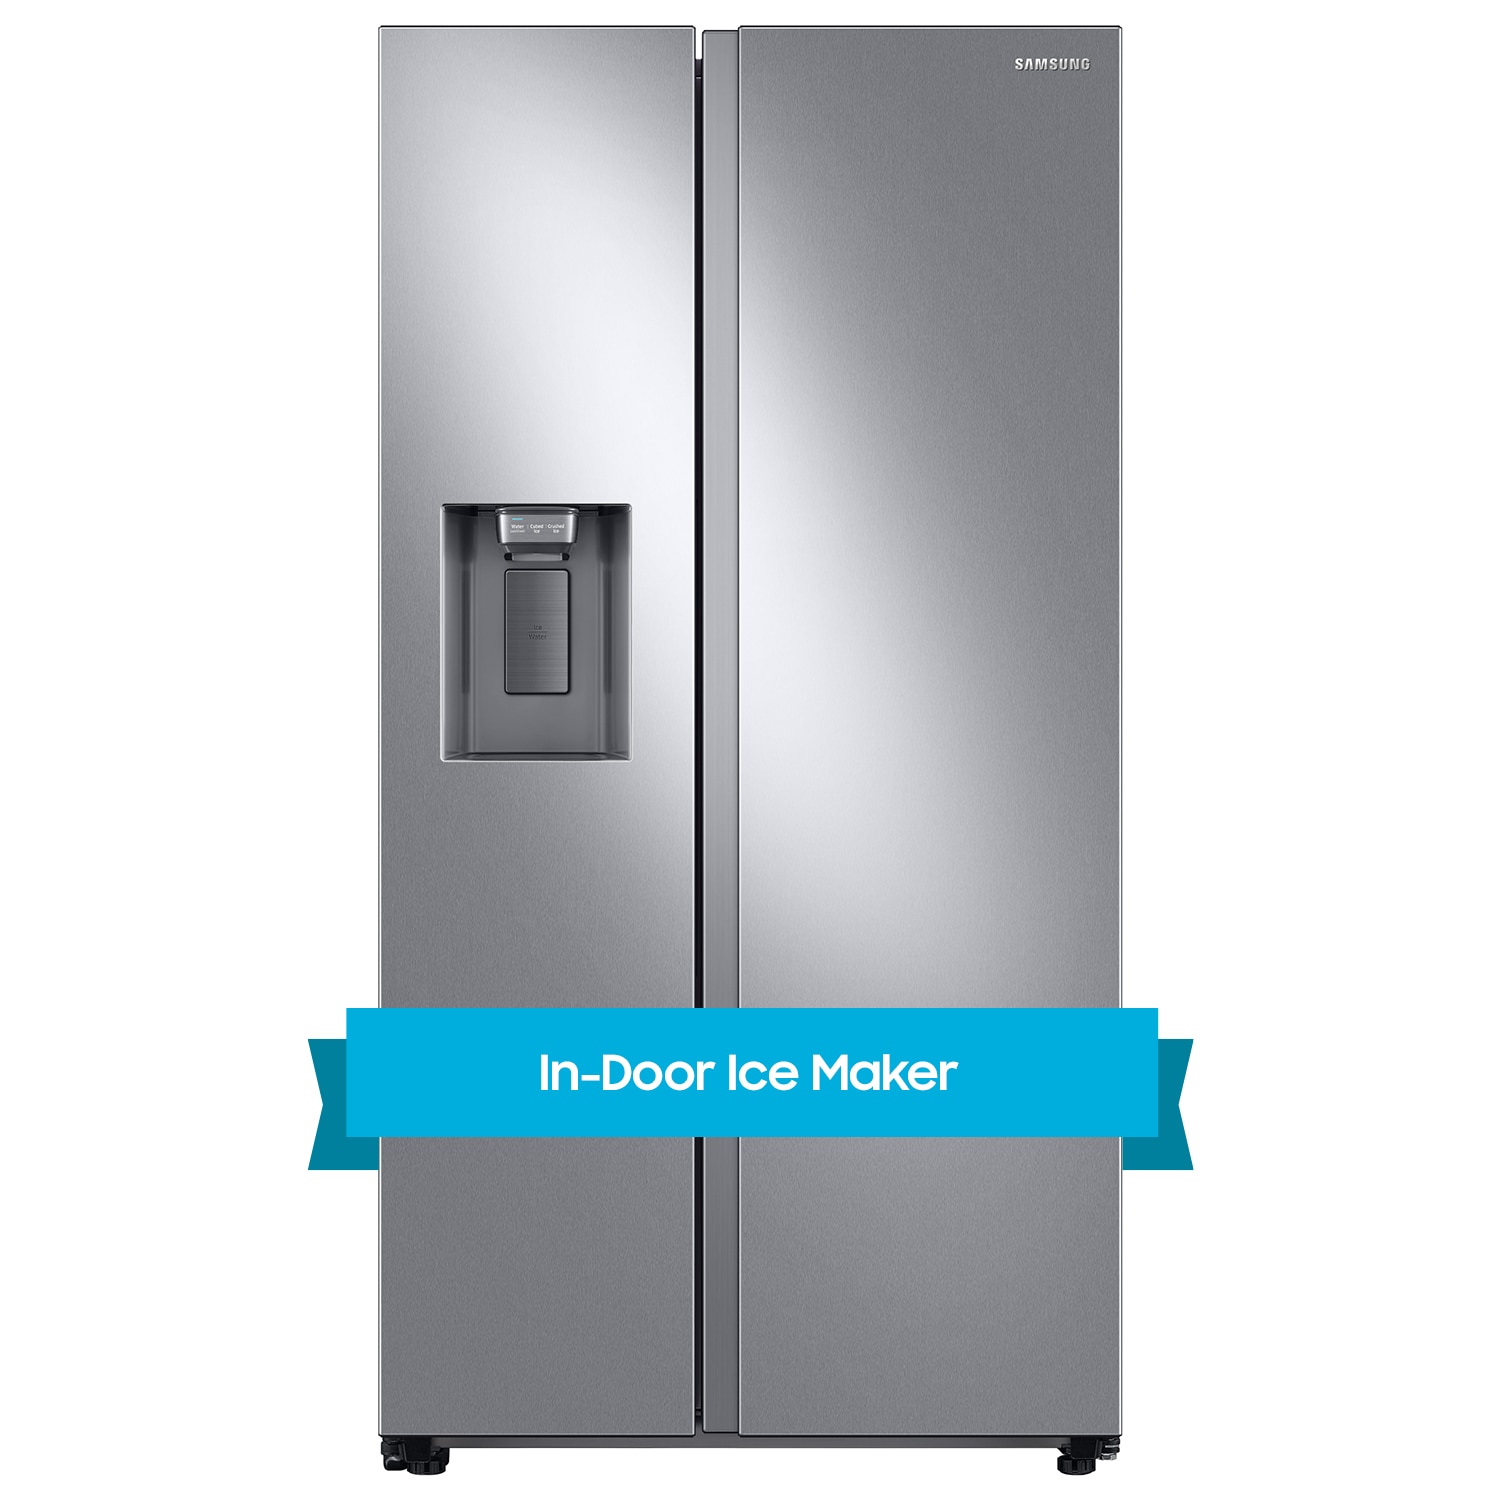 36 in. 27.4 cu. ft. Side by Side Refrigerator in Fingerprint-Resistant  Stainless Steel, Standard Depth